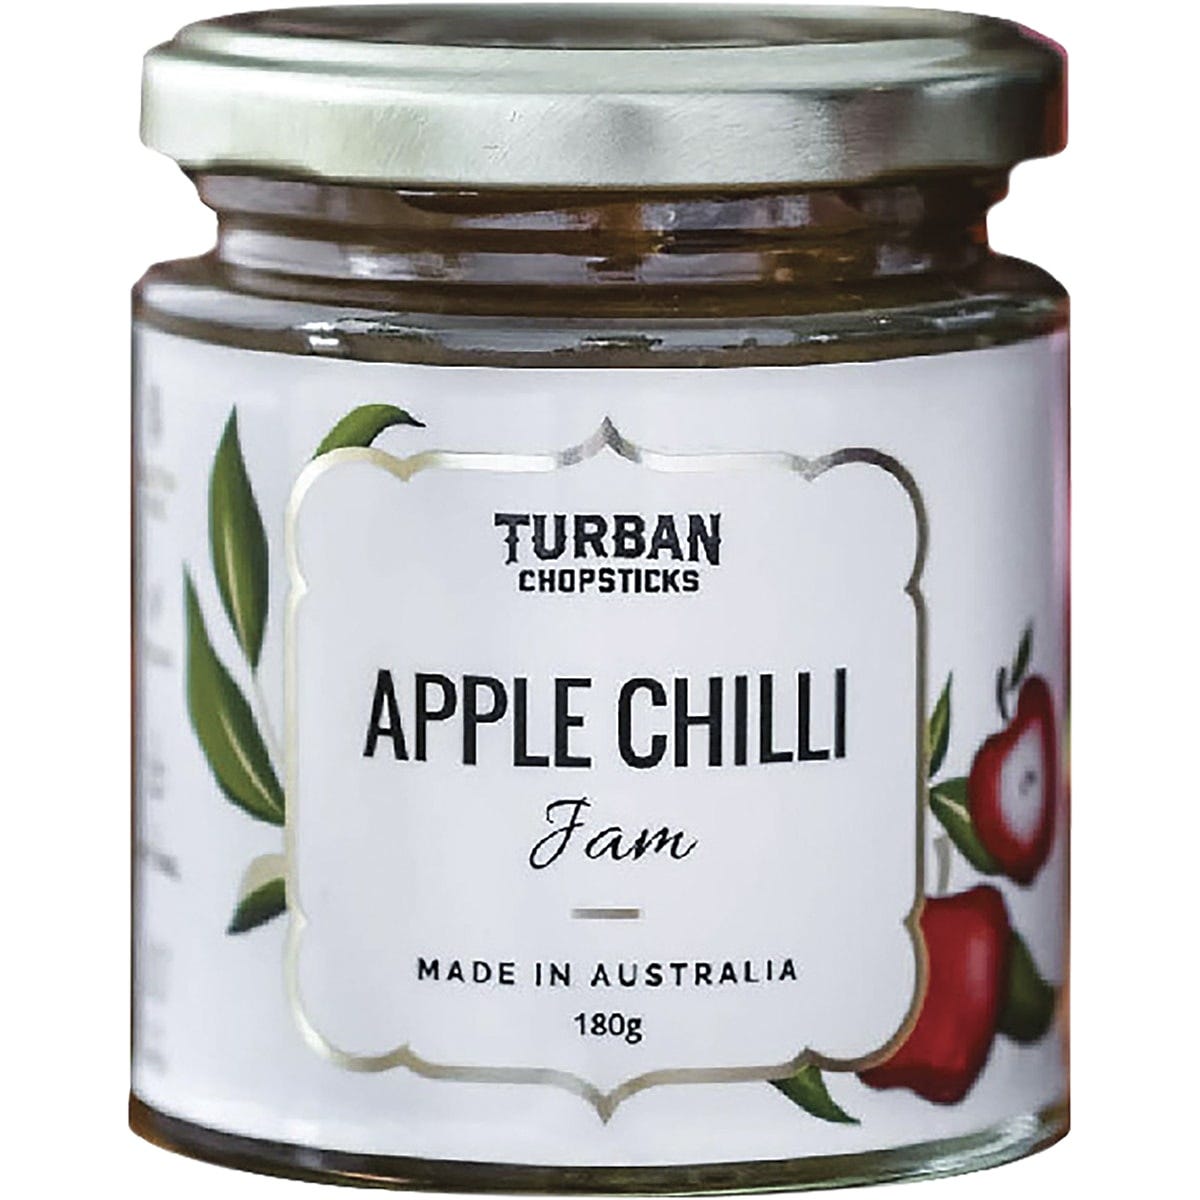 Turban Chopsticks Jam Apple Chilli 180g - Dr Earth - Condiments